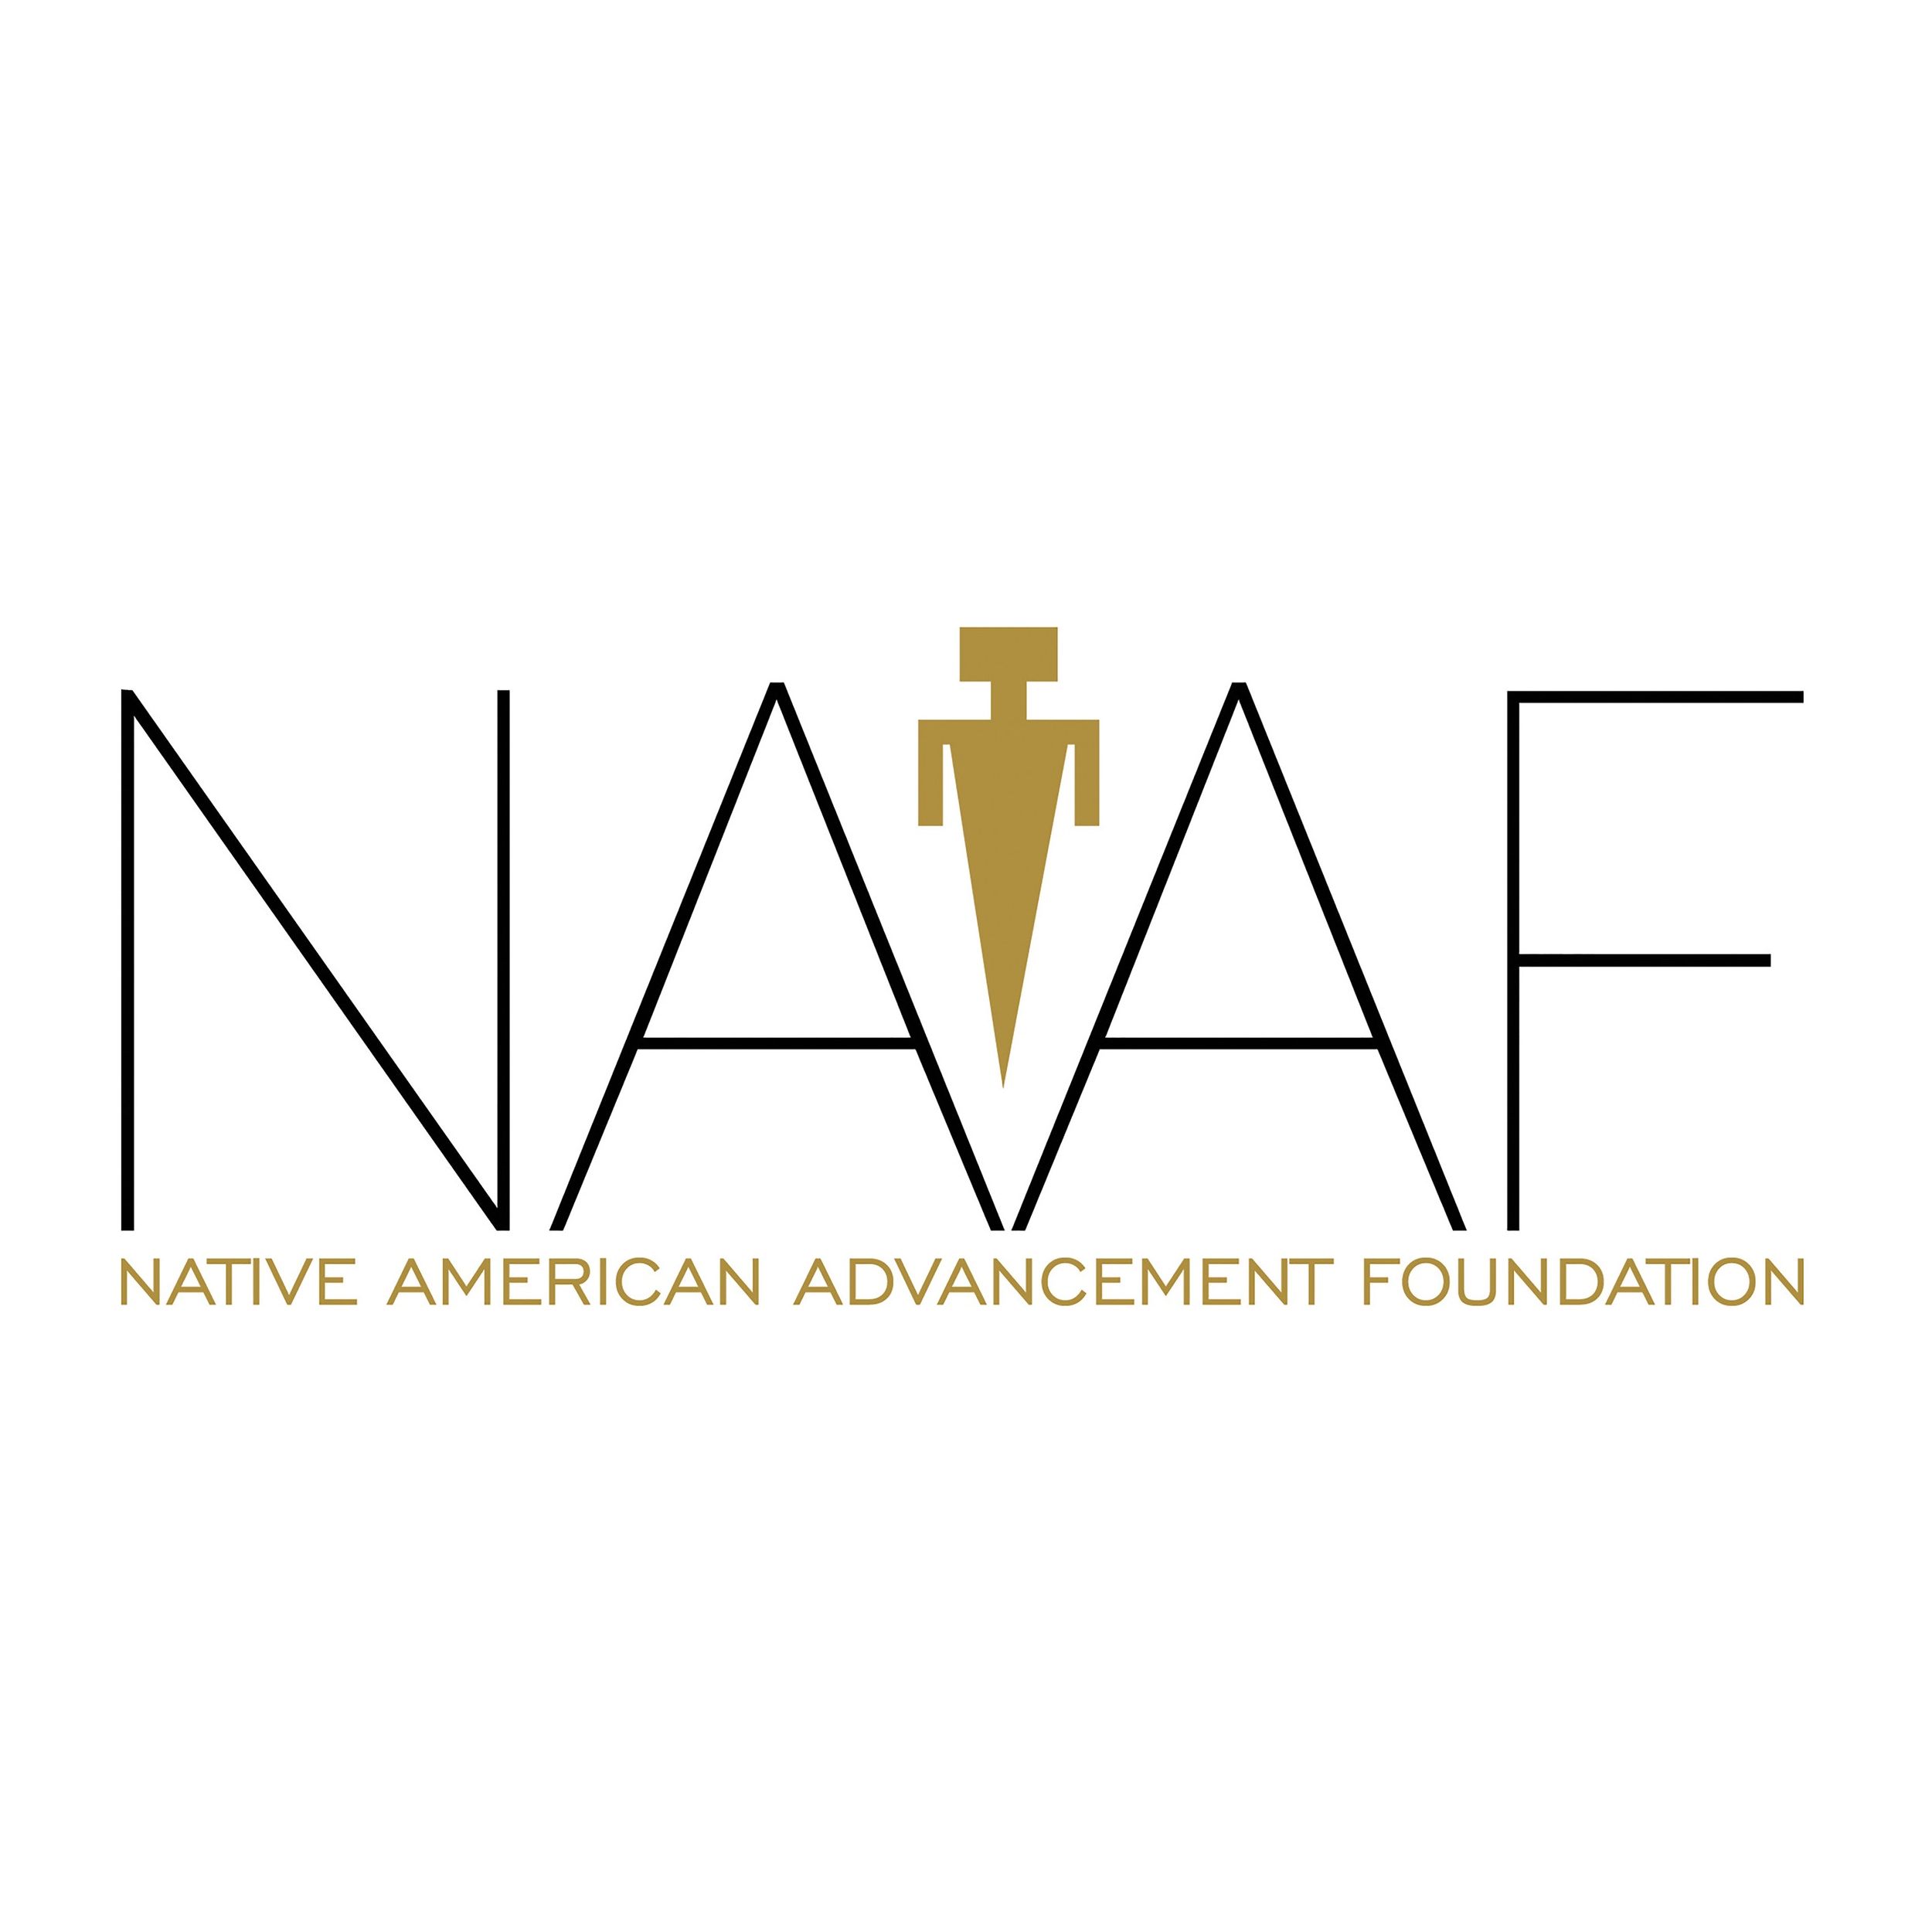 Native American Organization in Phoenix Arizona - Native American Advancement Foundation